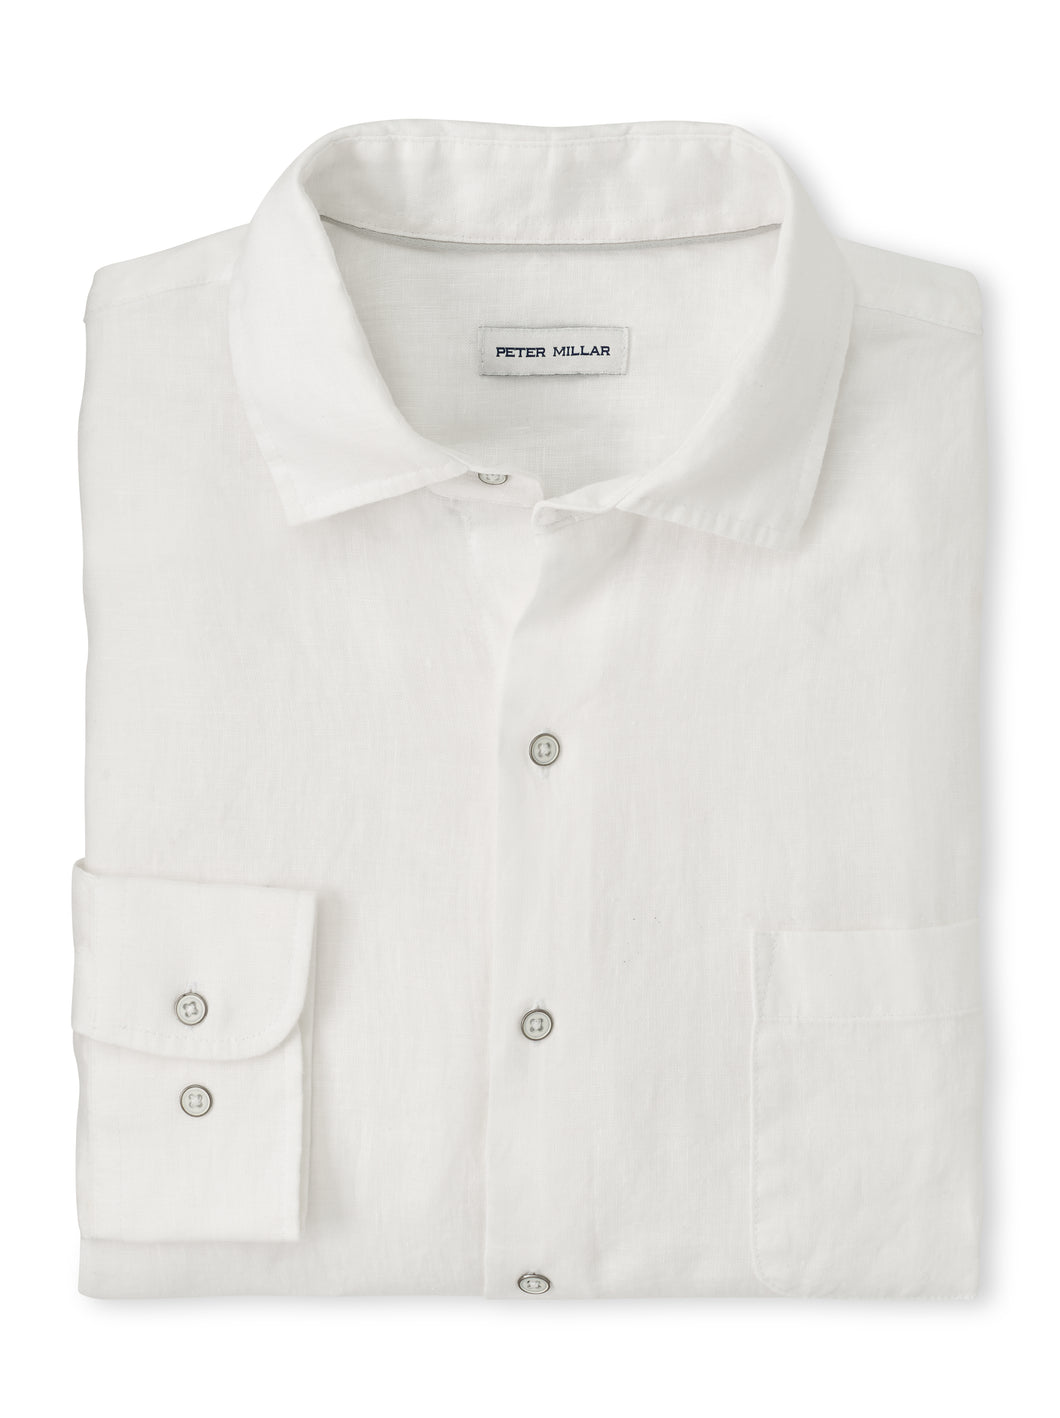 Peter Millar Coastal Garment-Dyed Linen Sport Shirt in White